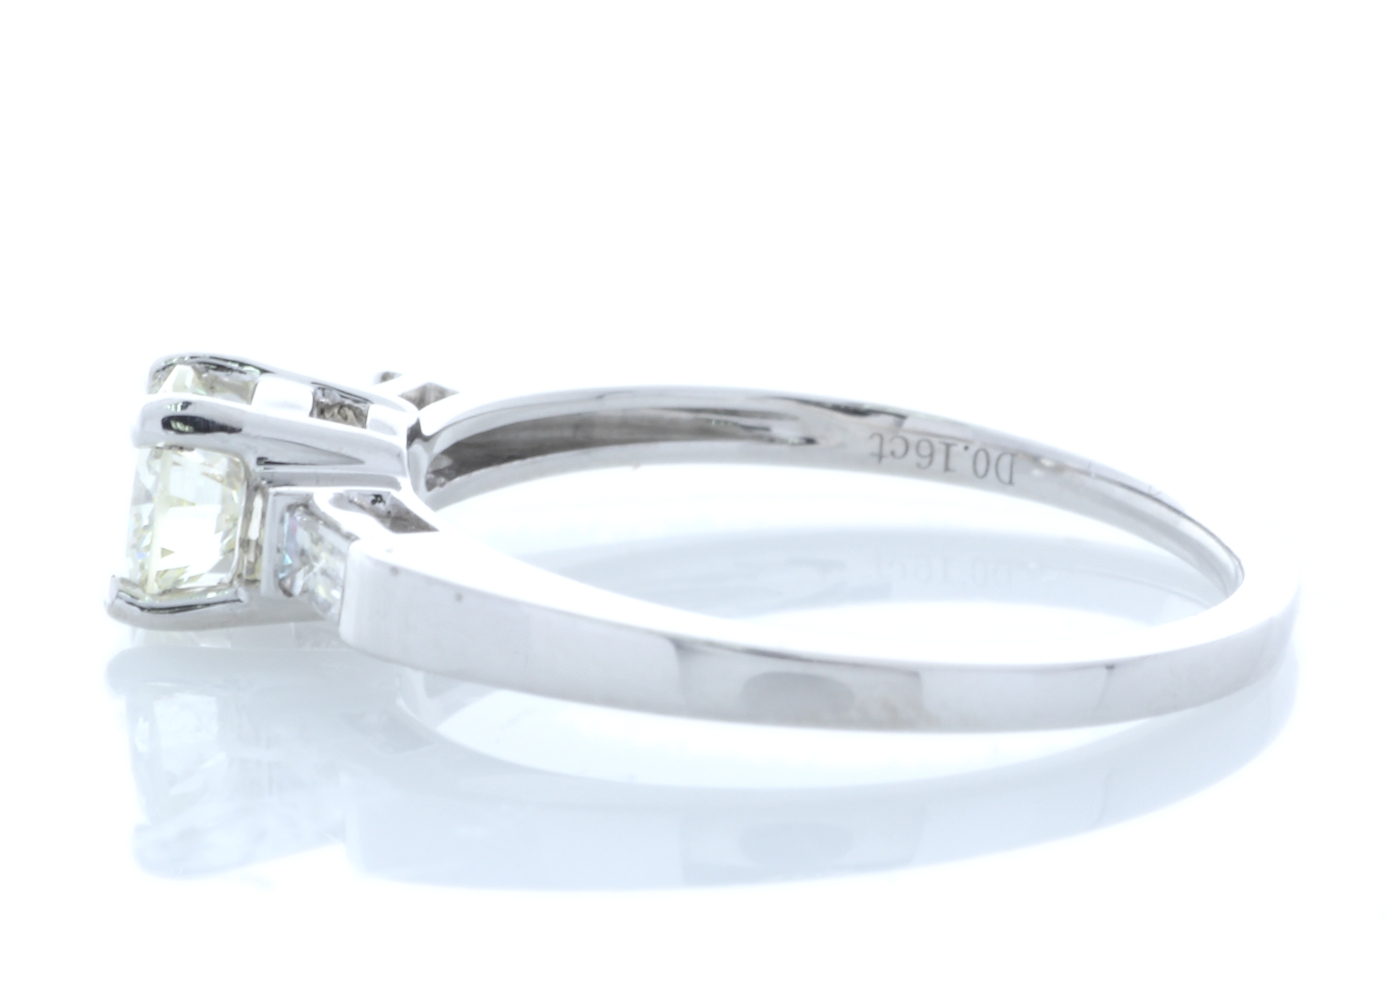 18ct White Gold Baguette Shoulder Set Diamond Ring 0.67 Carats - Image 2 of 5